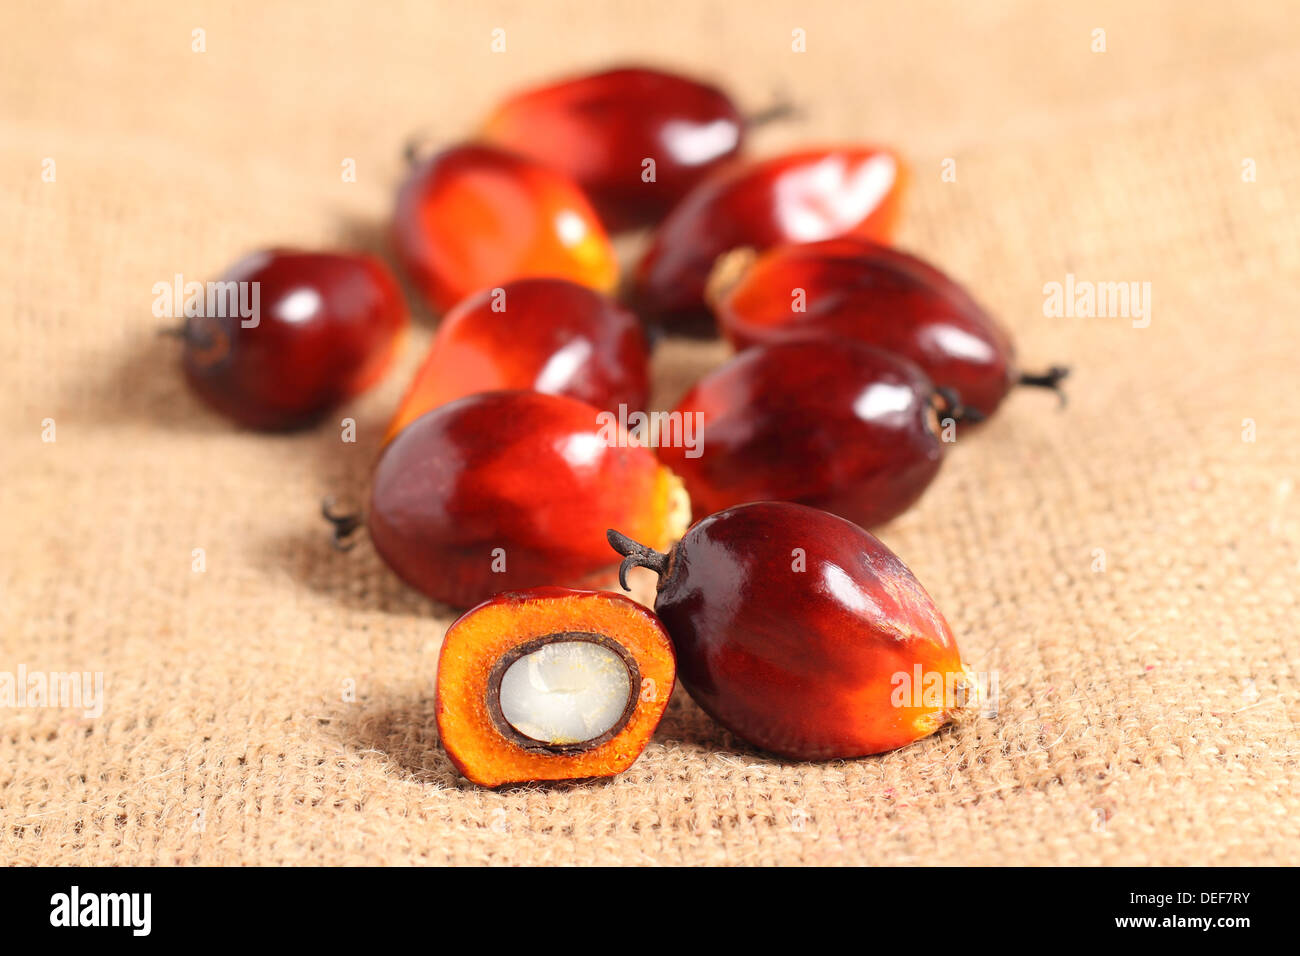 Un grupo de frutos de palma de aceite en el fondo de saco de arpillera. Foto de stock